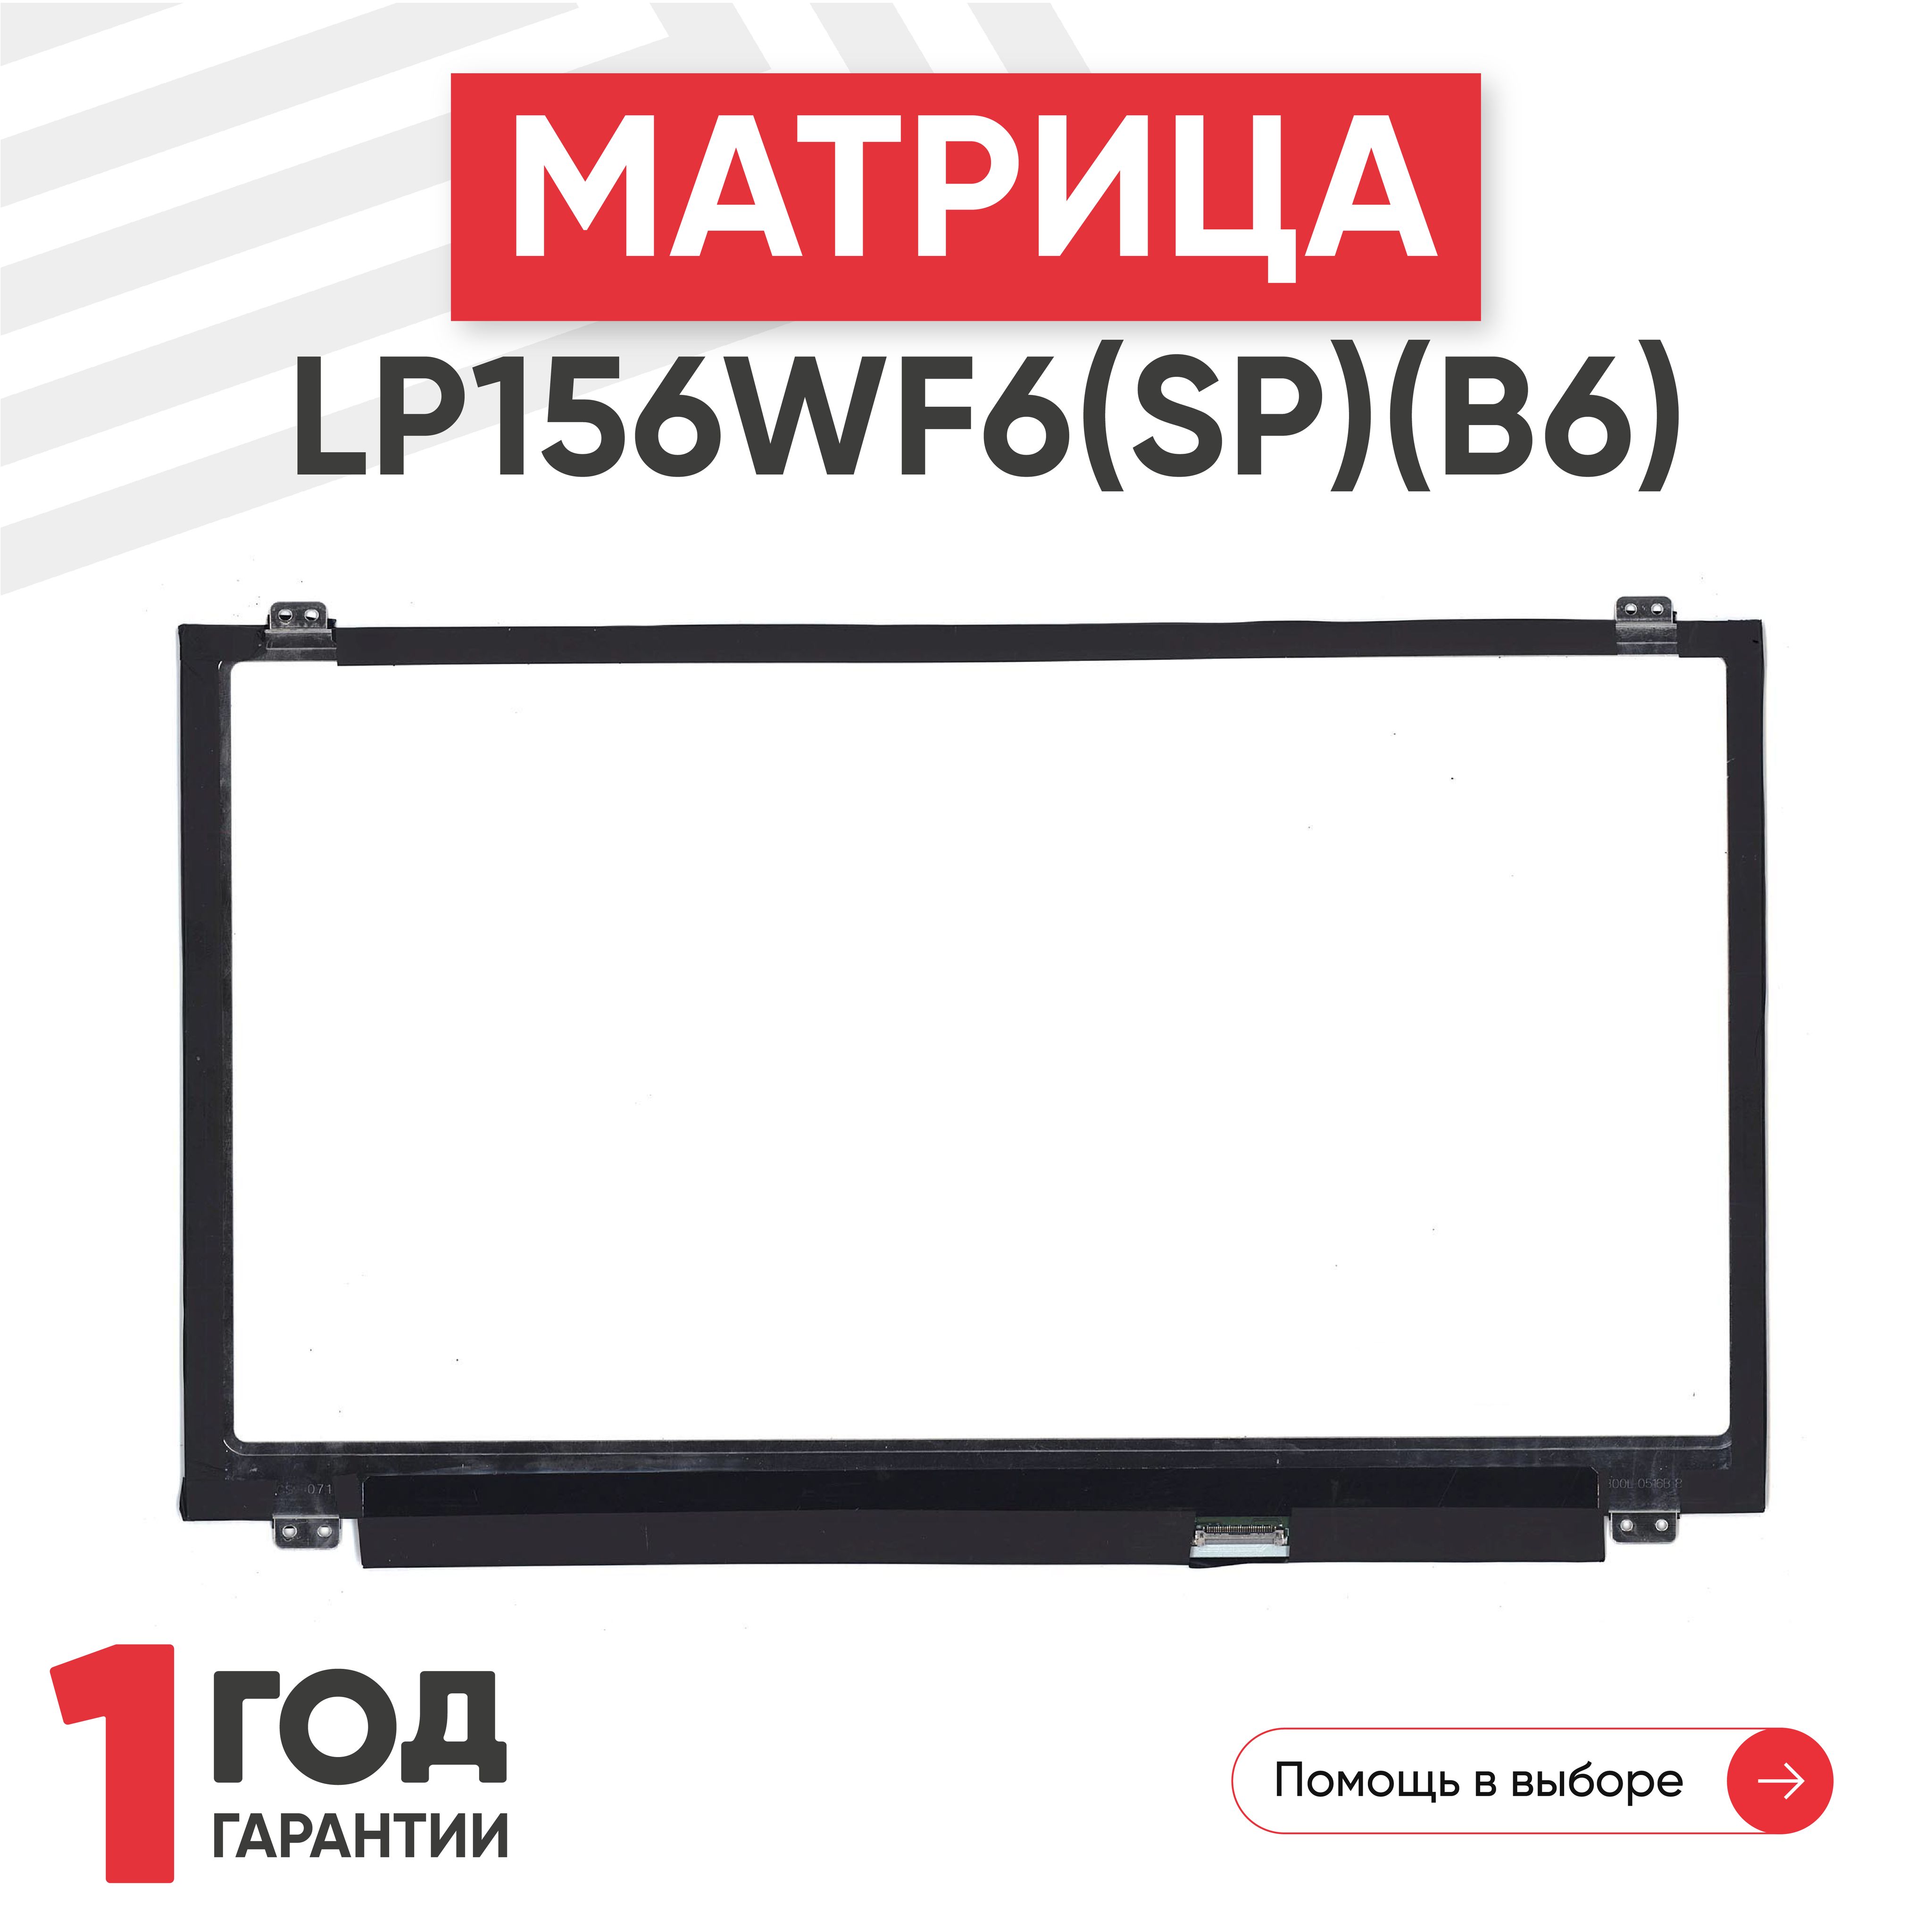 МатрицаRageXLP156WF6(SP)(B6)дляноутбука,1920х1080(FullHD),15.6",pin30,светодиодная(LED),матовая,IPS